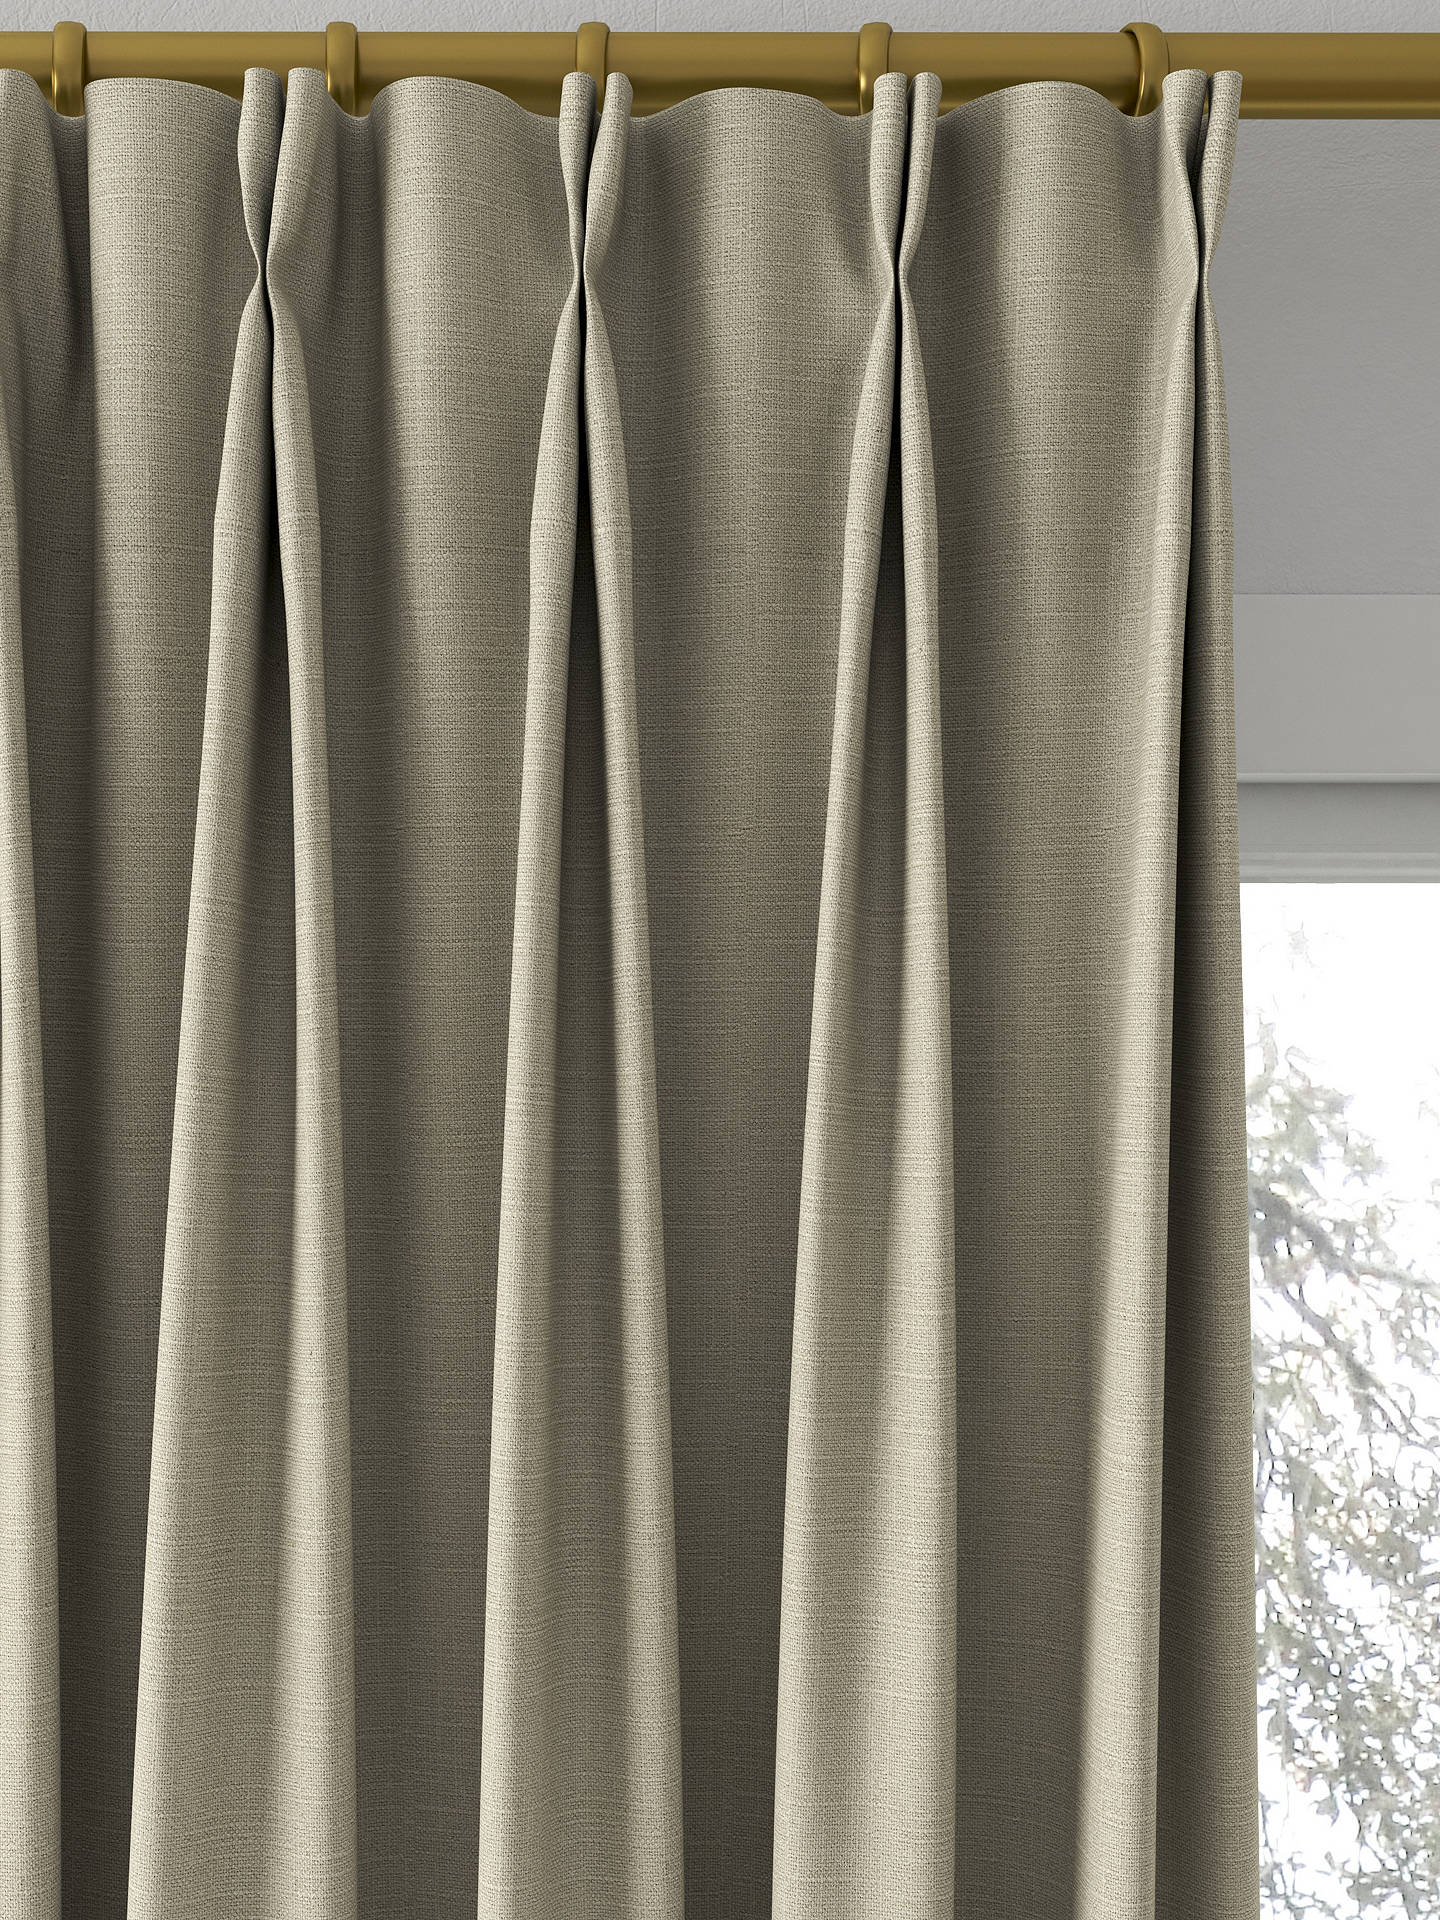 Sanderson Tuscany II Made to Measure Curtains, Marzipan